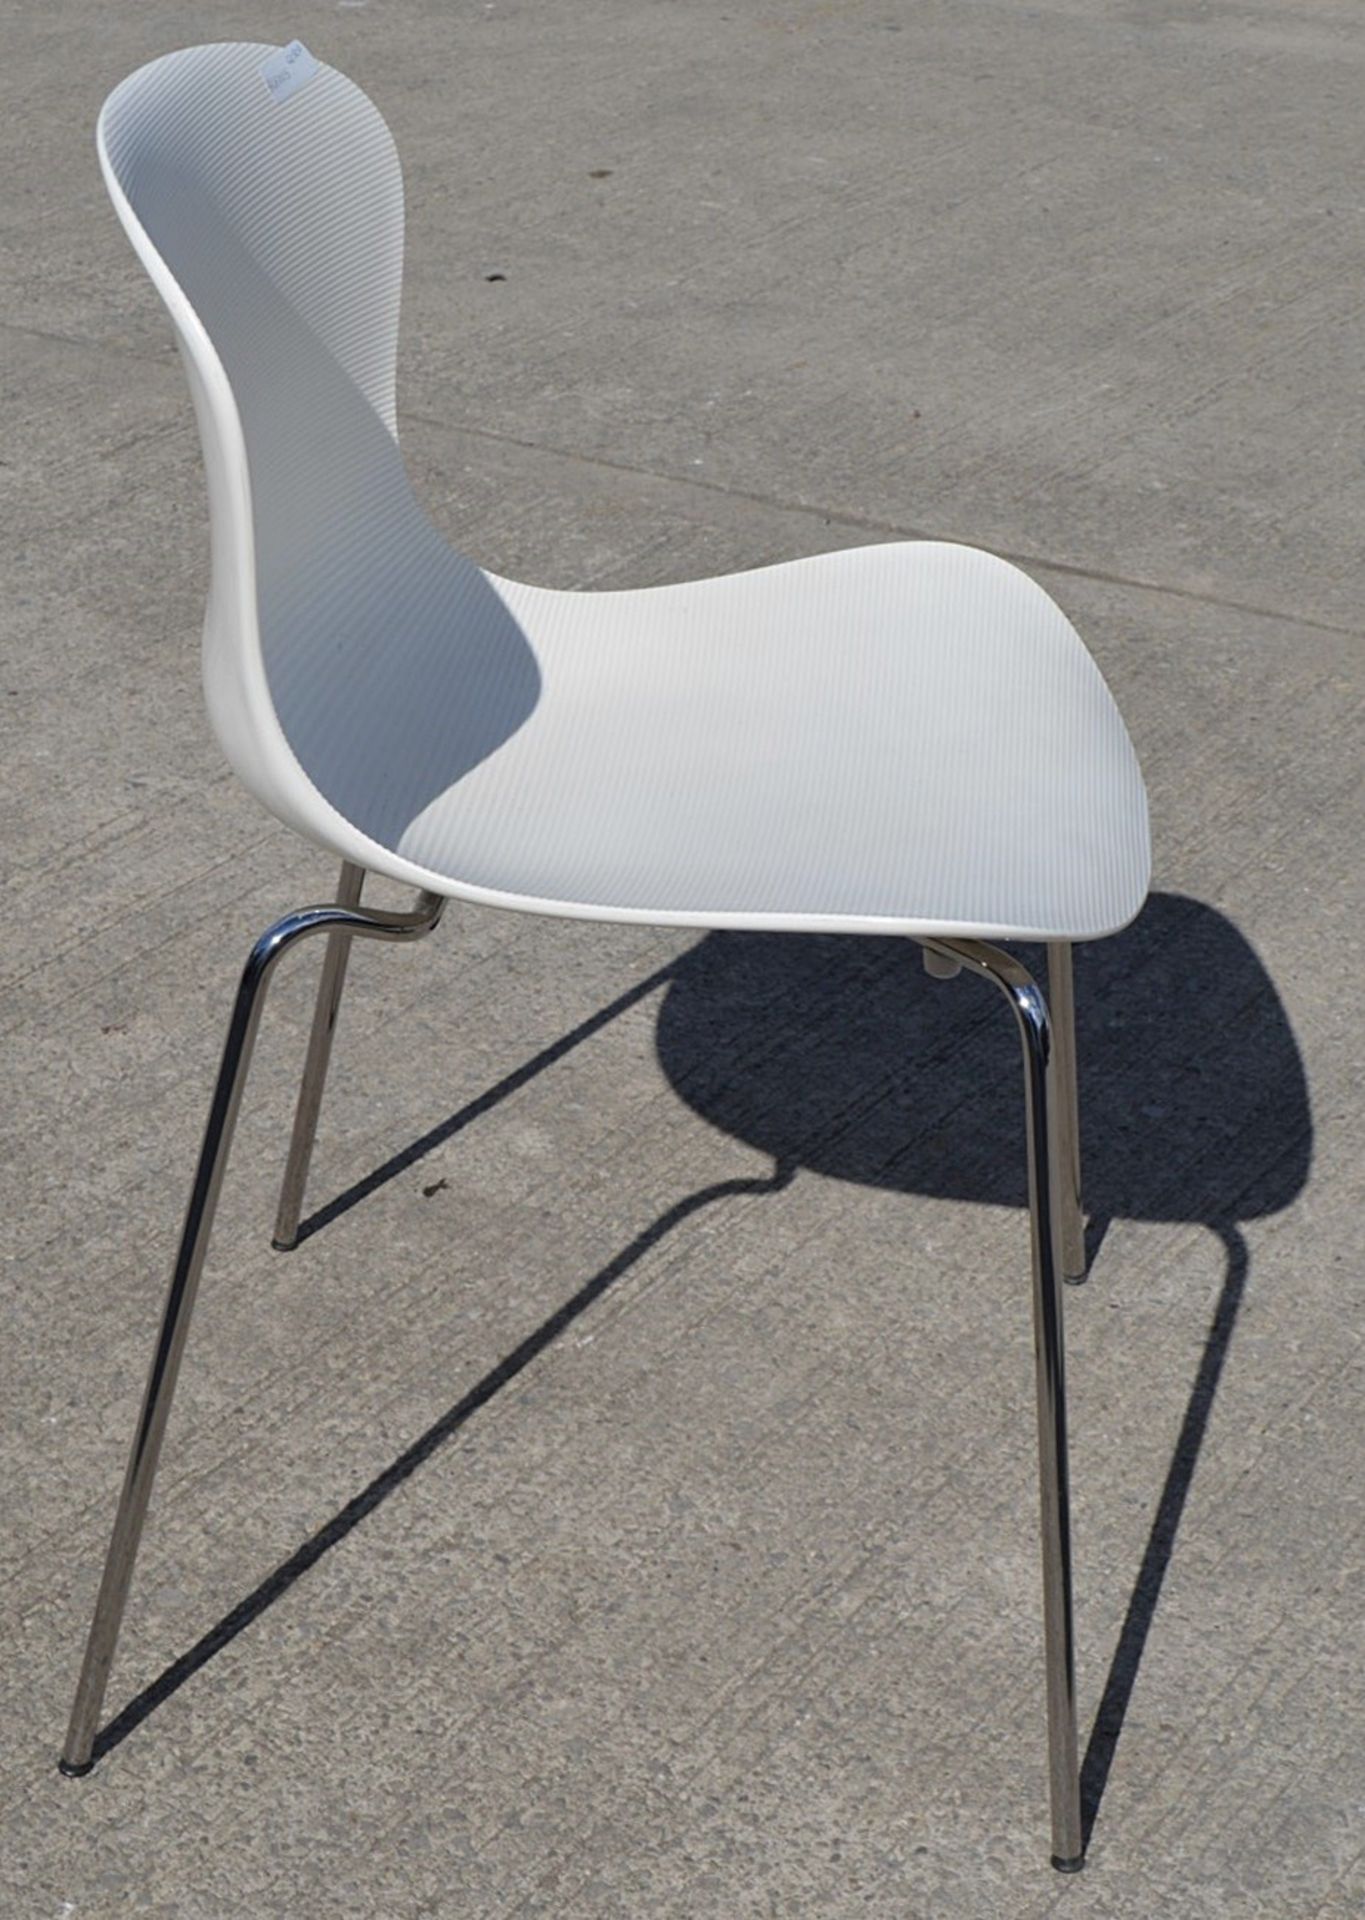 1 x Genuine Fritz Hansen 'Nap' Designer Chair In White & Chrome (KS50) - Dimensions: W48 x D40 x - Image 6 of 6